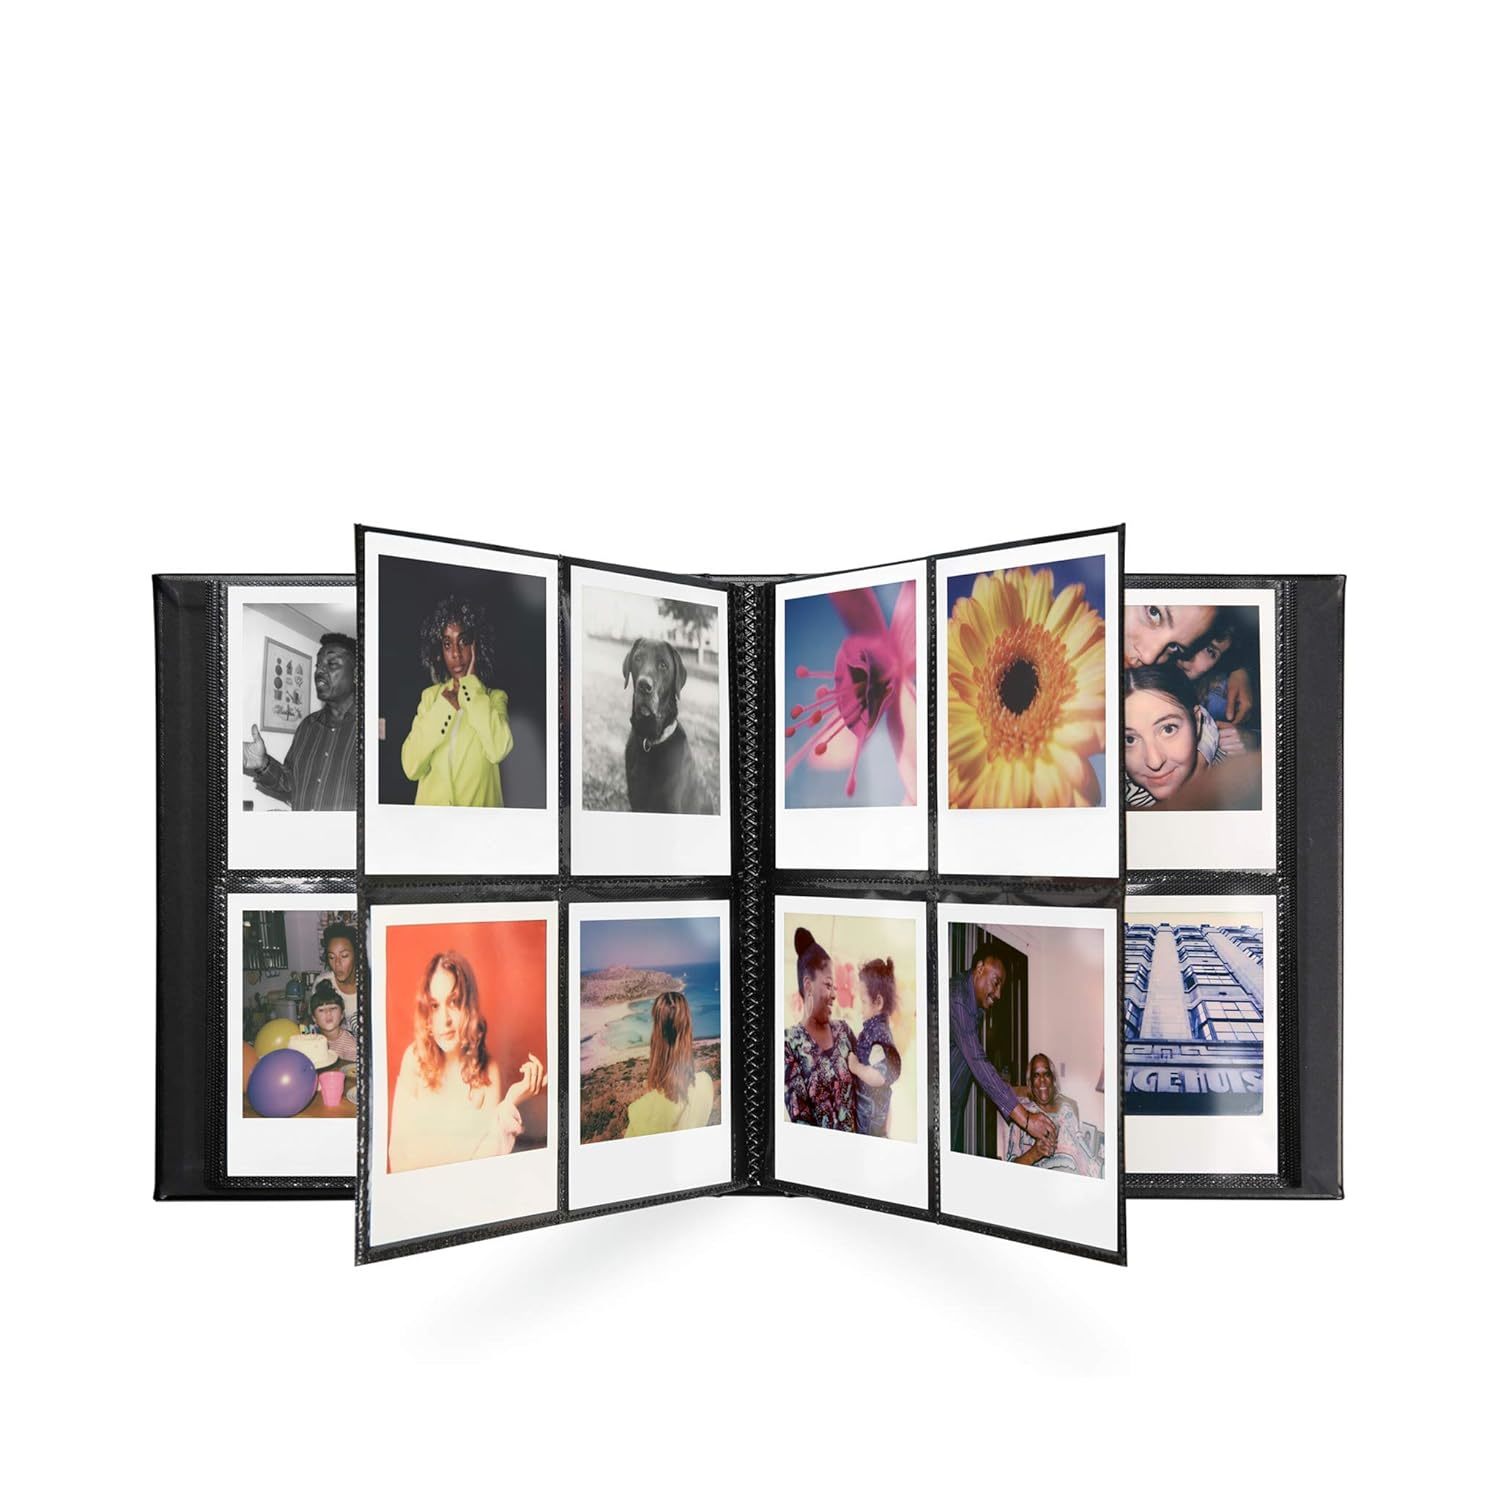 Primary image for Polaroid Photo Album - Large